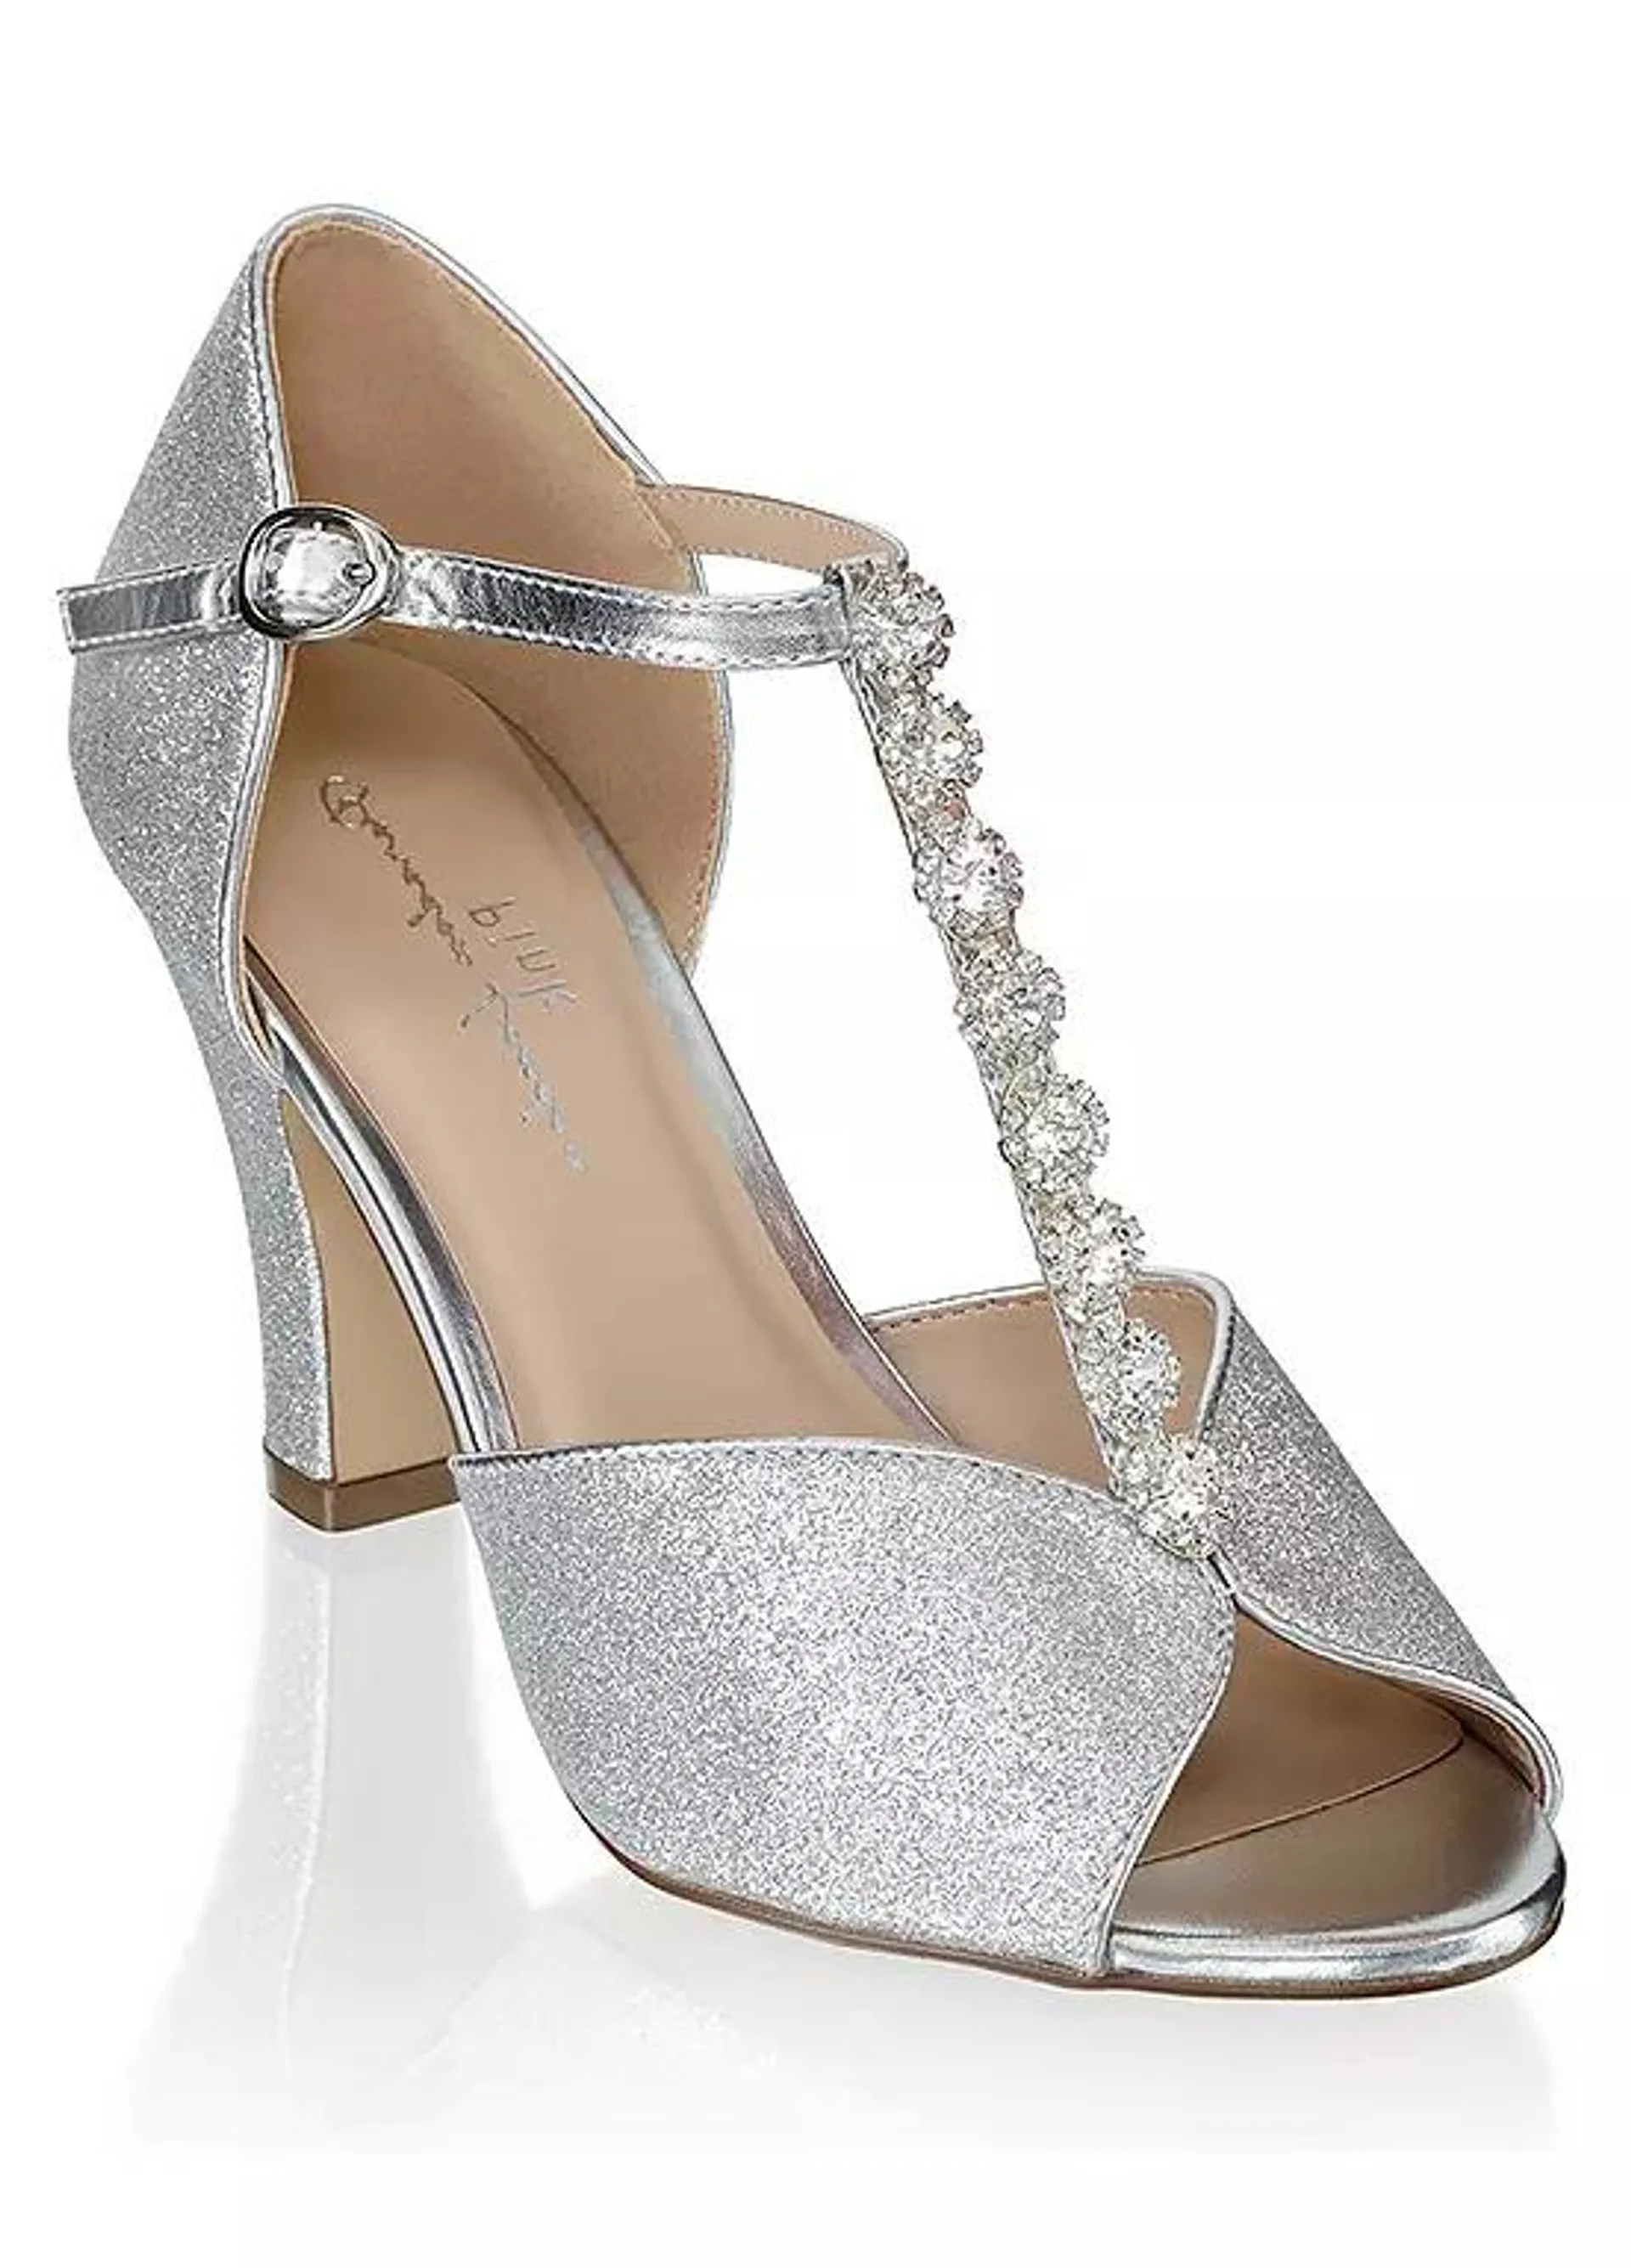 Paradox London Silver Glitter ’Rosie’ T-Bar Sandals